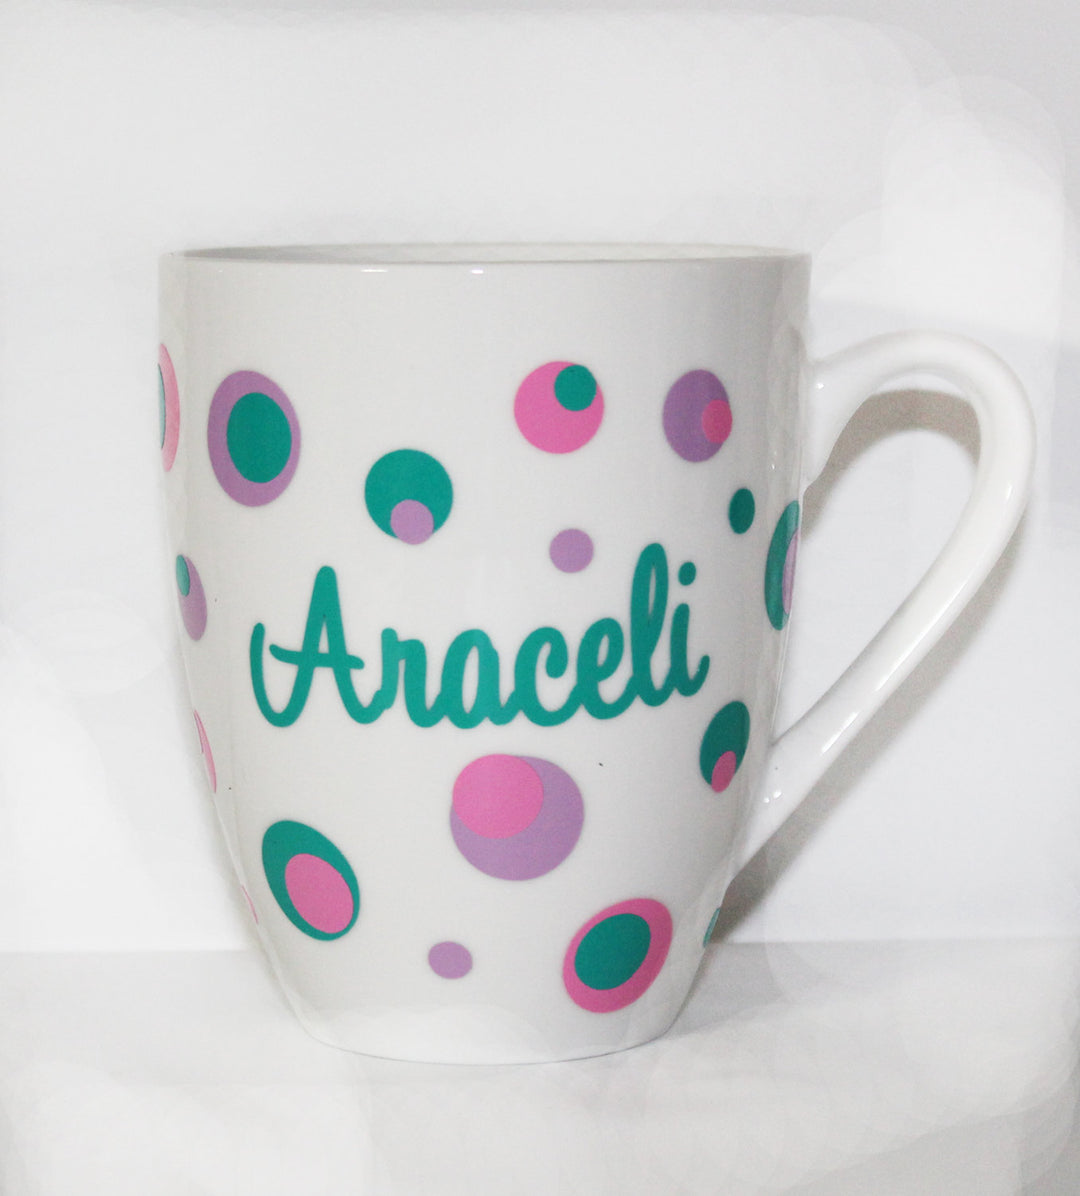 Boss" Ceramic Mug - Gift - Birthday - Mom - Thank You - Coffee - Tea - Hot Beverage - Husband - Wife - Friend - Workplace